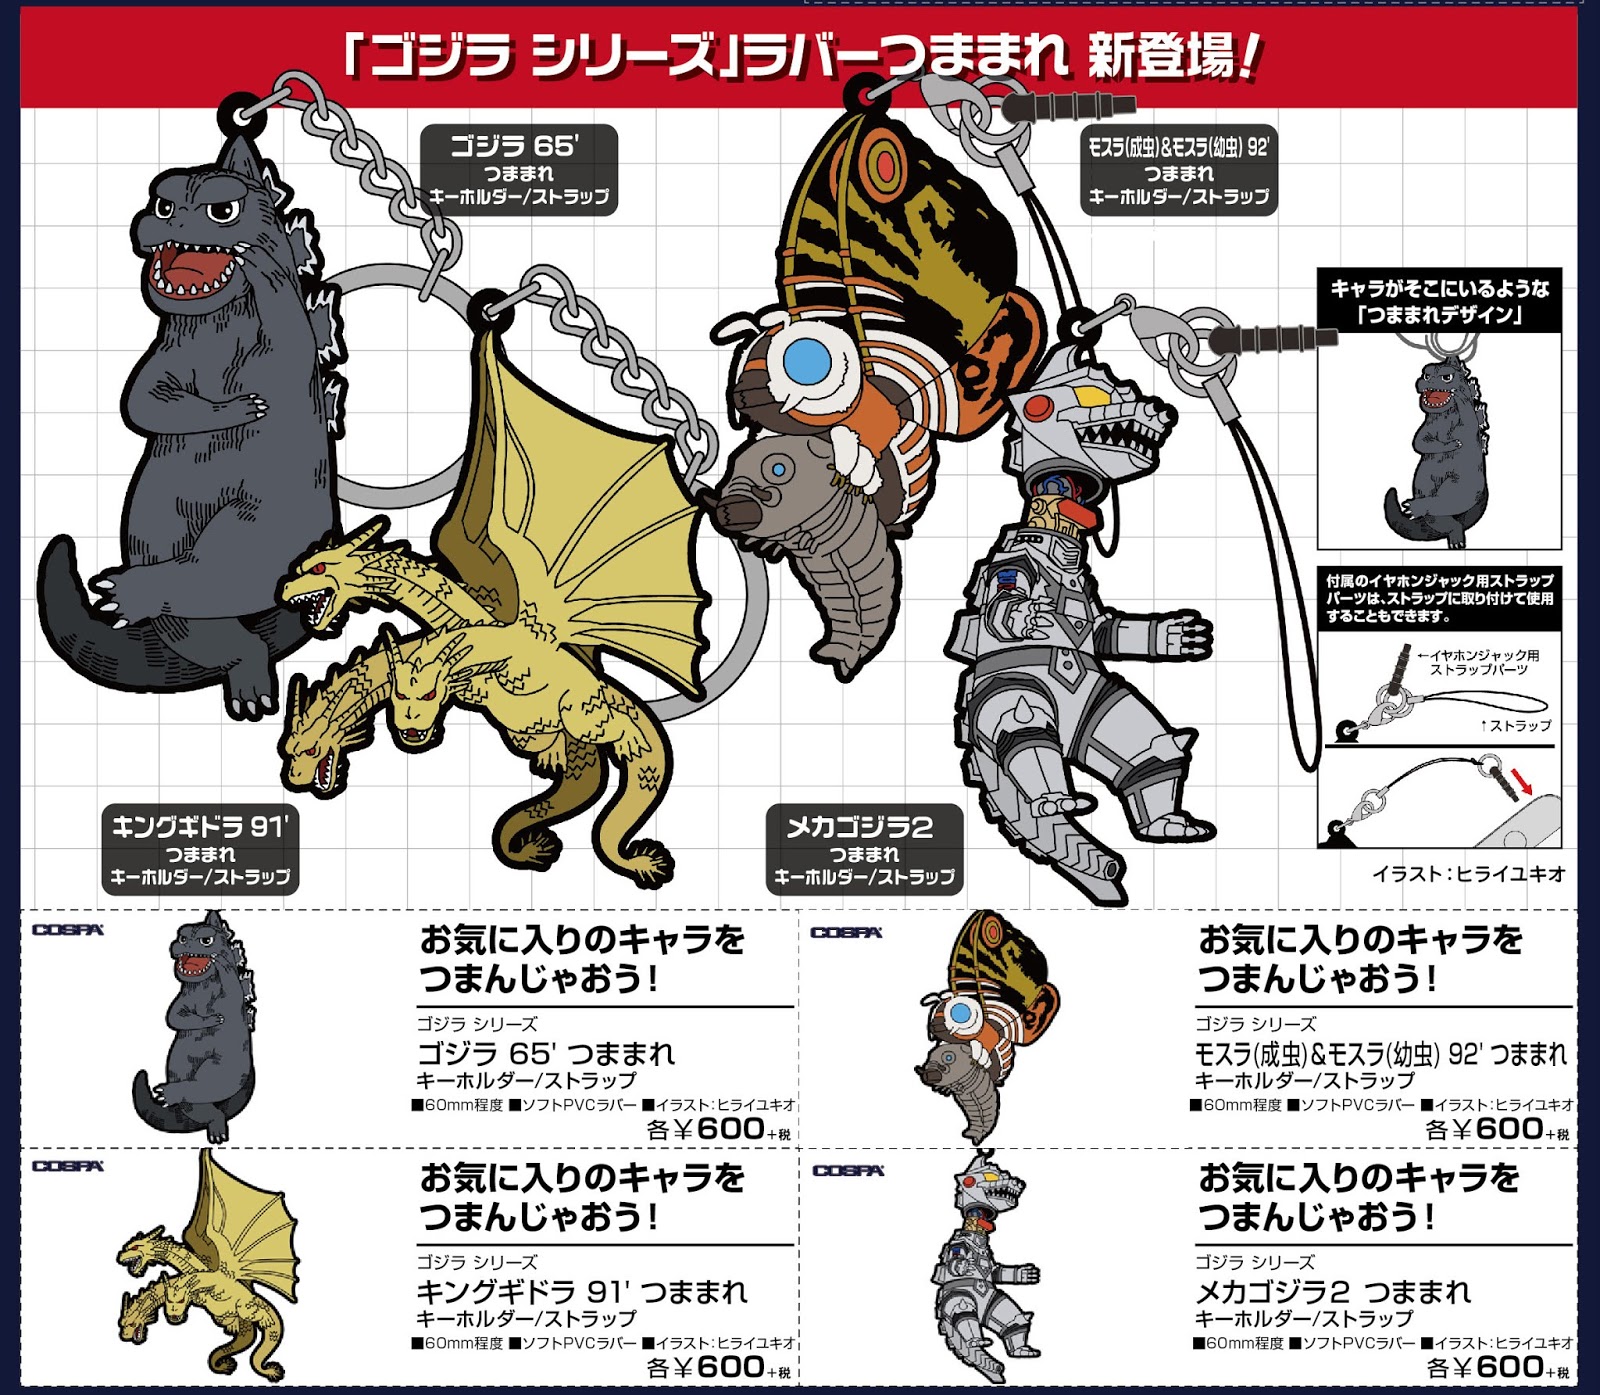 Rev 代購 預購 ゴジラシリーズ つままれキーホルダー ストラップ 各種 Godzilla Series Tsumamare Key Chain Strap